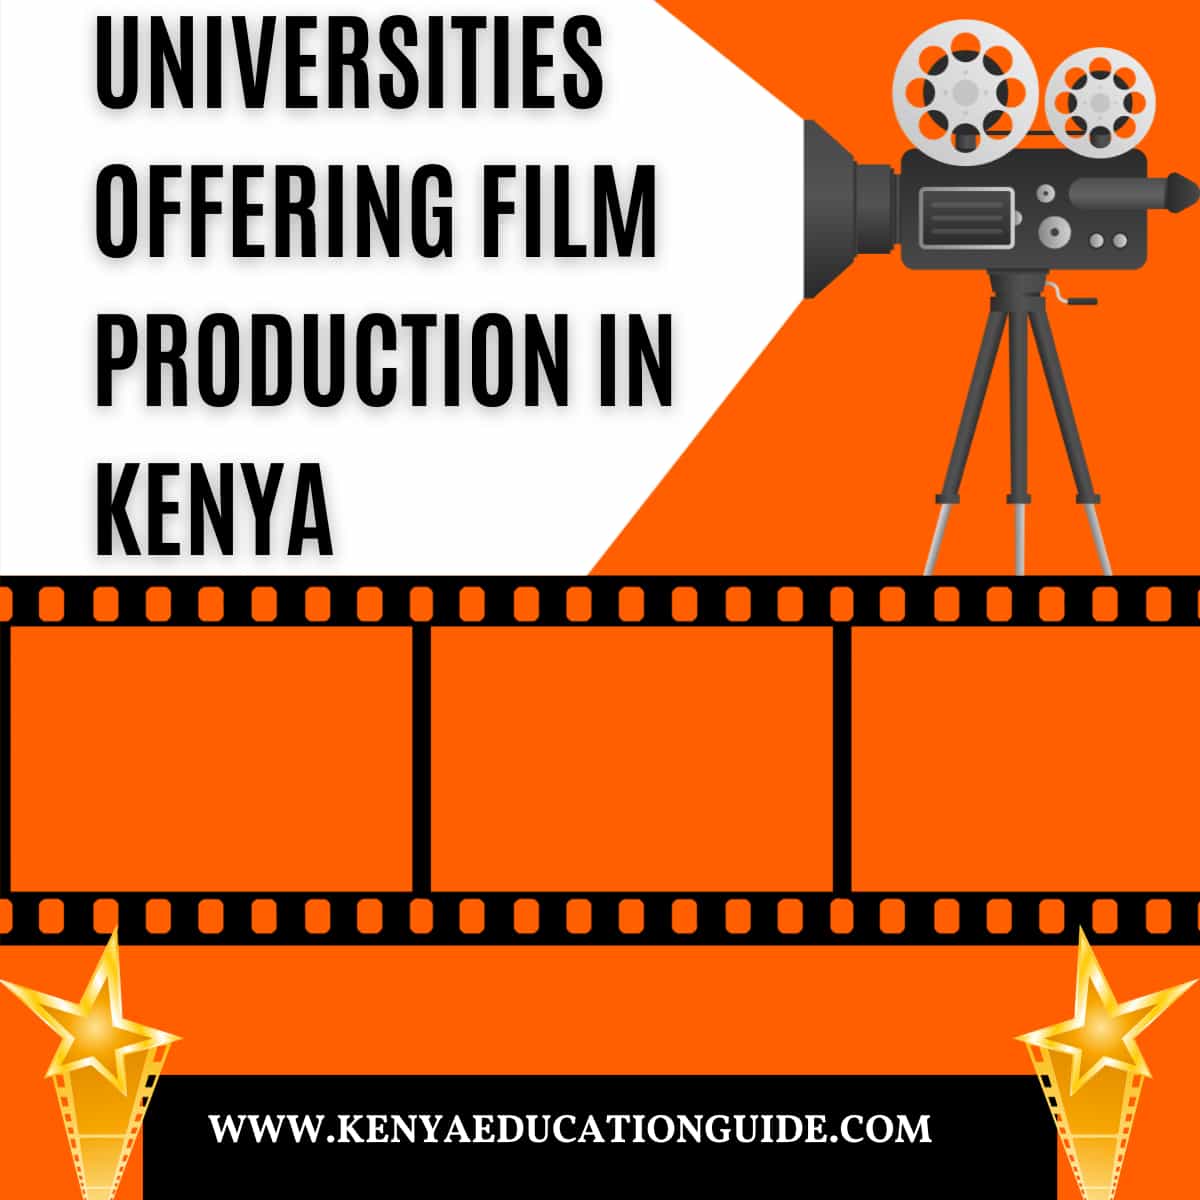 Universities Offering Film Production in Kenya